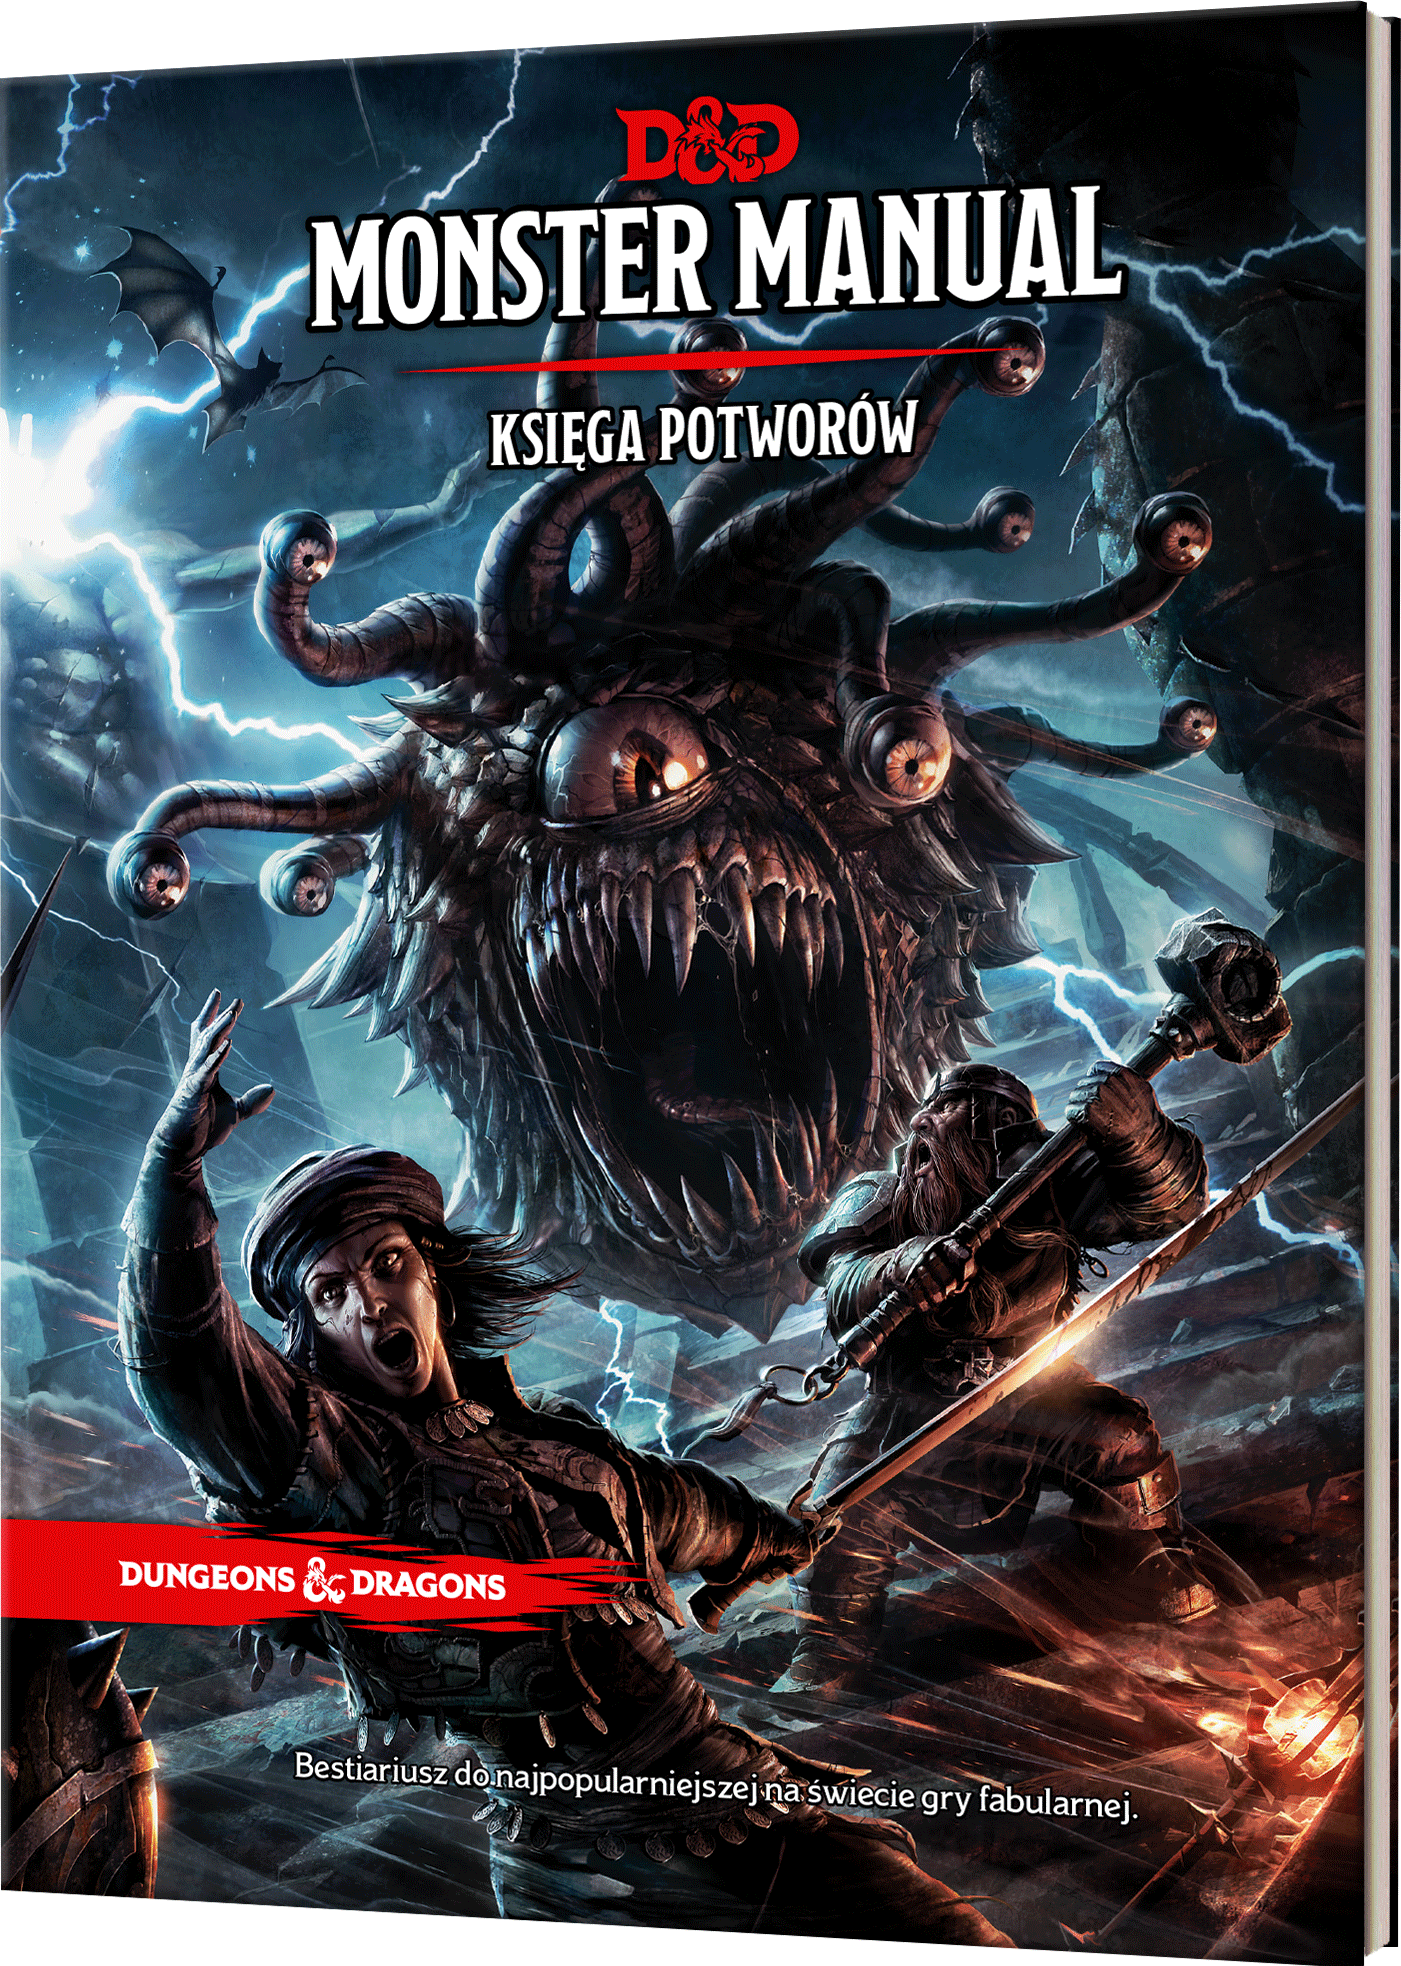 Dungeons & Dragons: Monster Manual PL (Księga potworów) (Podręcznik)